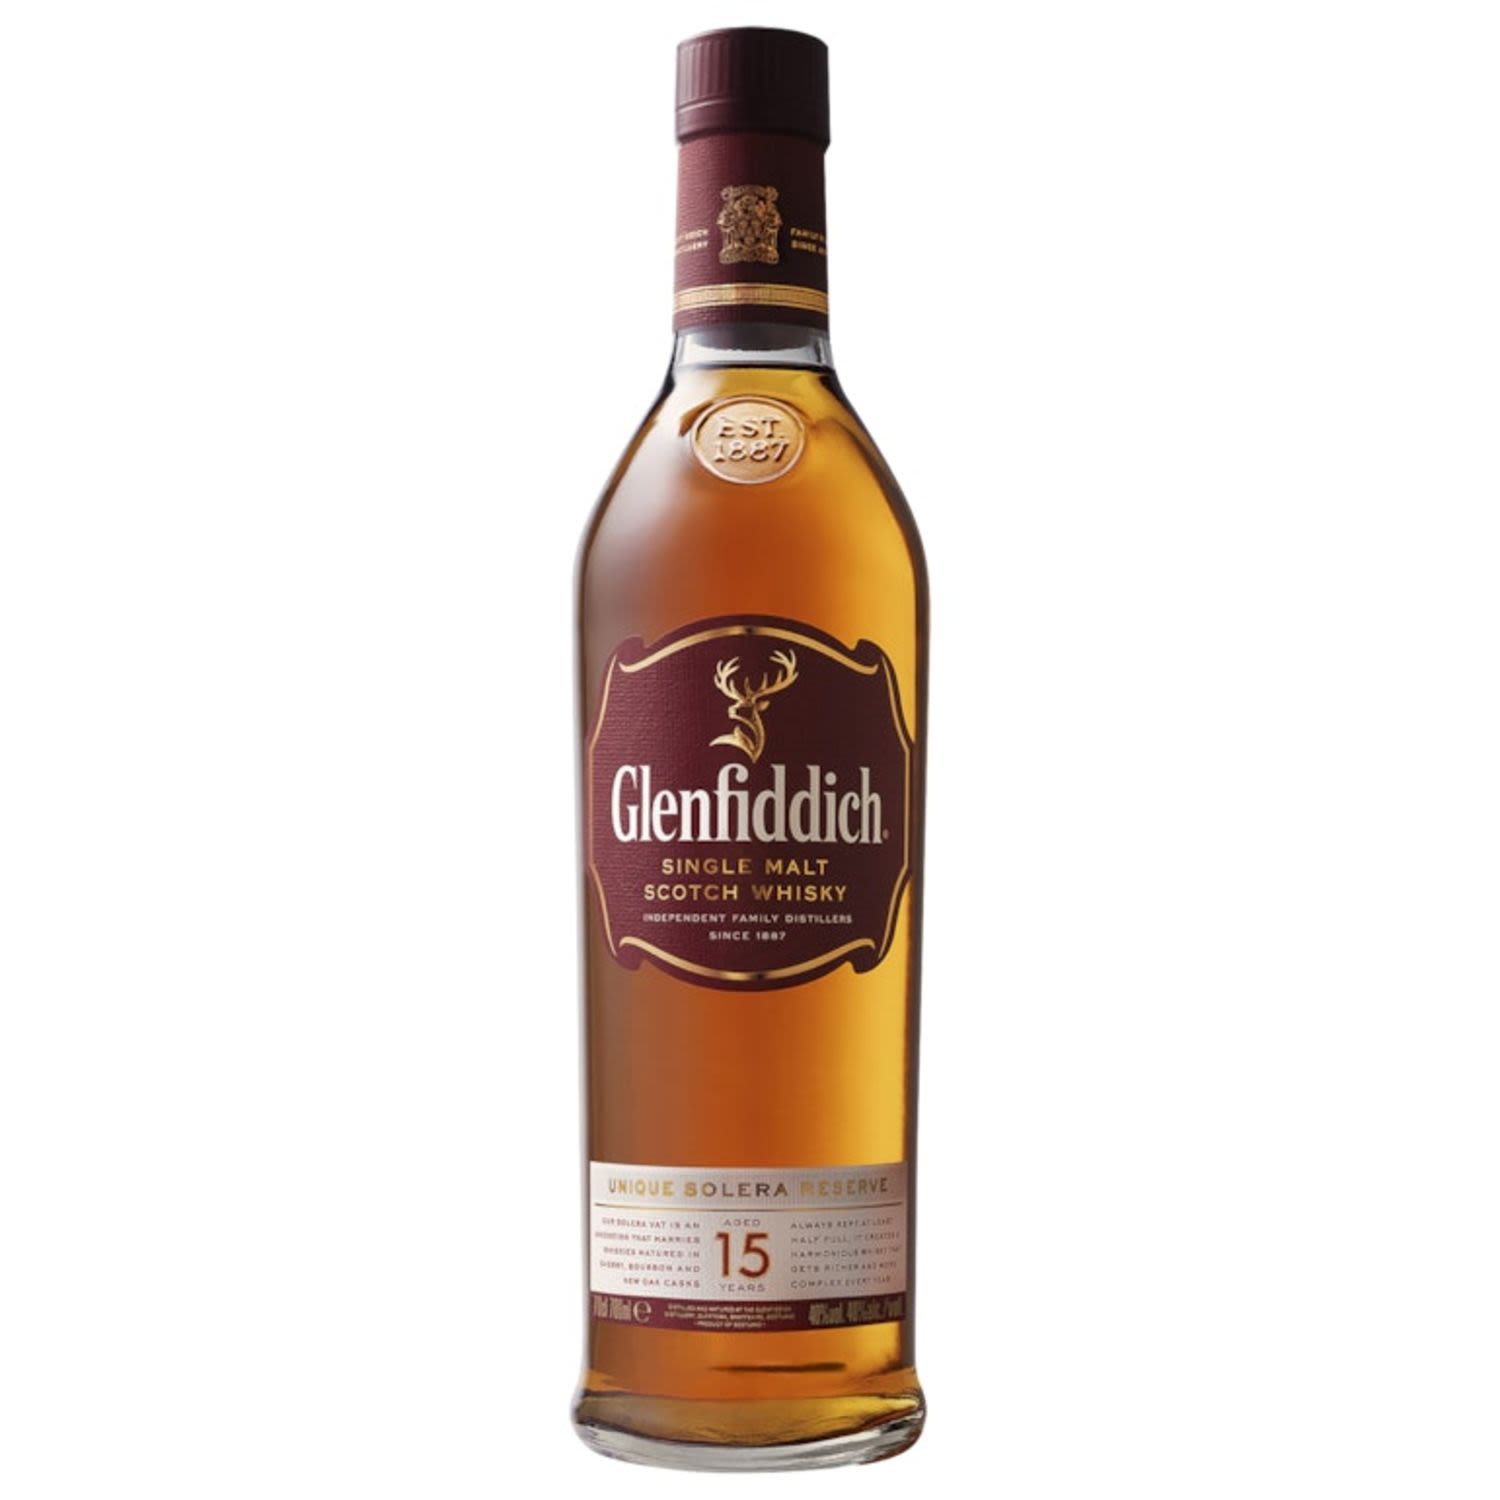 Glenfiddich 15 Year Old Single Malt Scotch Whisky 700mL Bottle